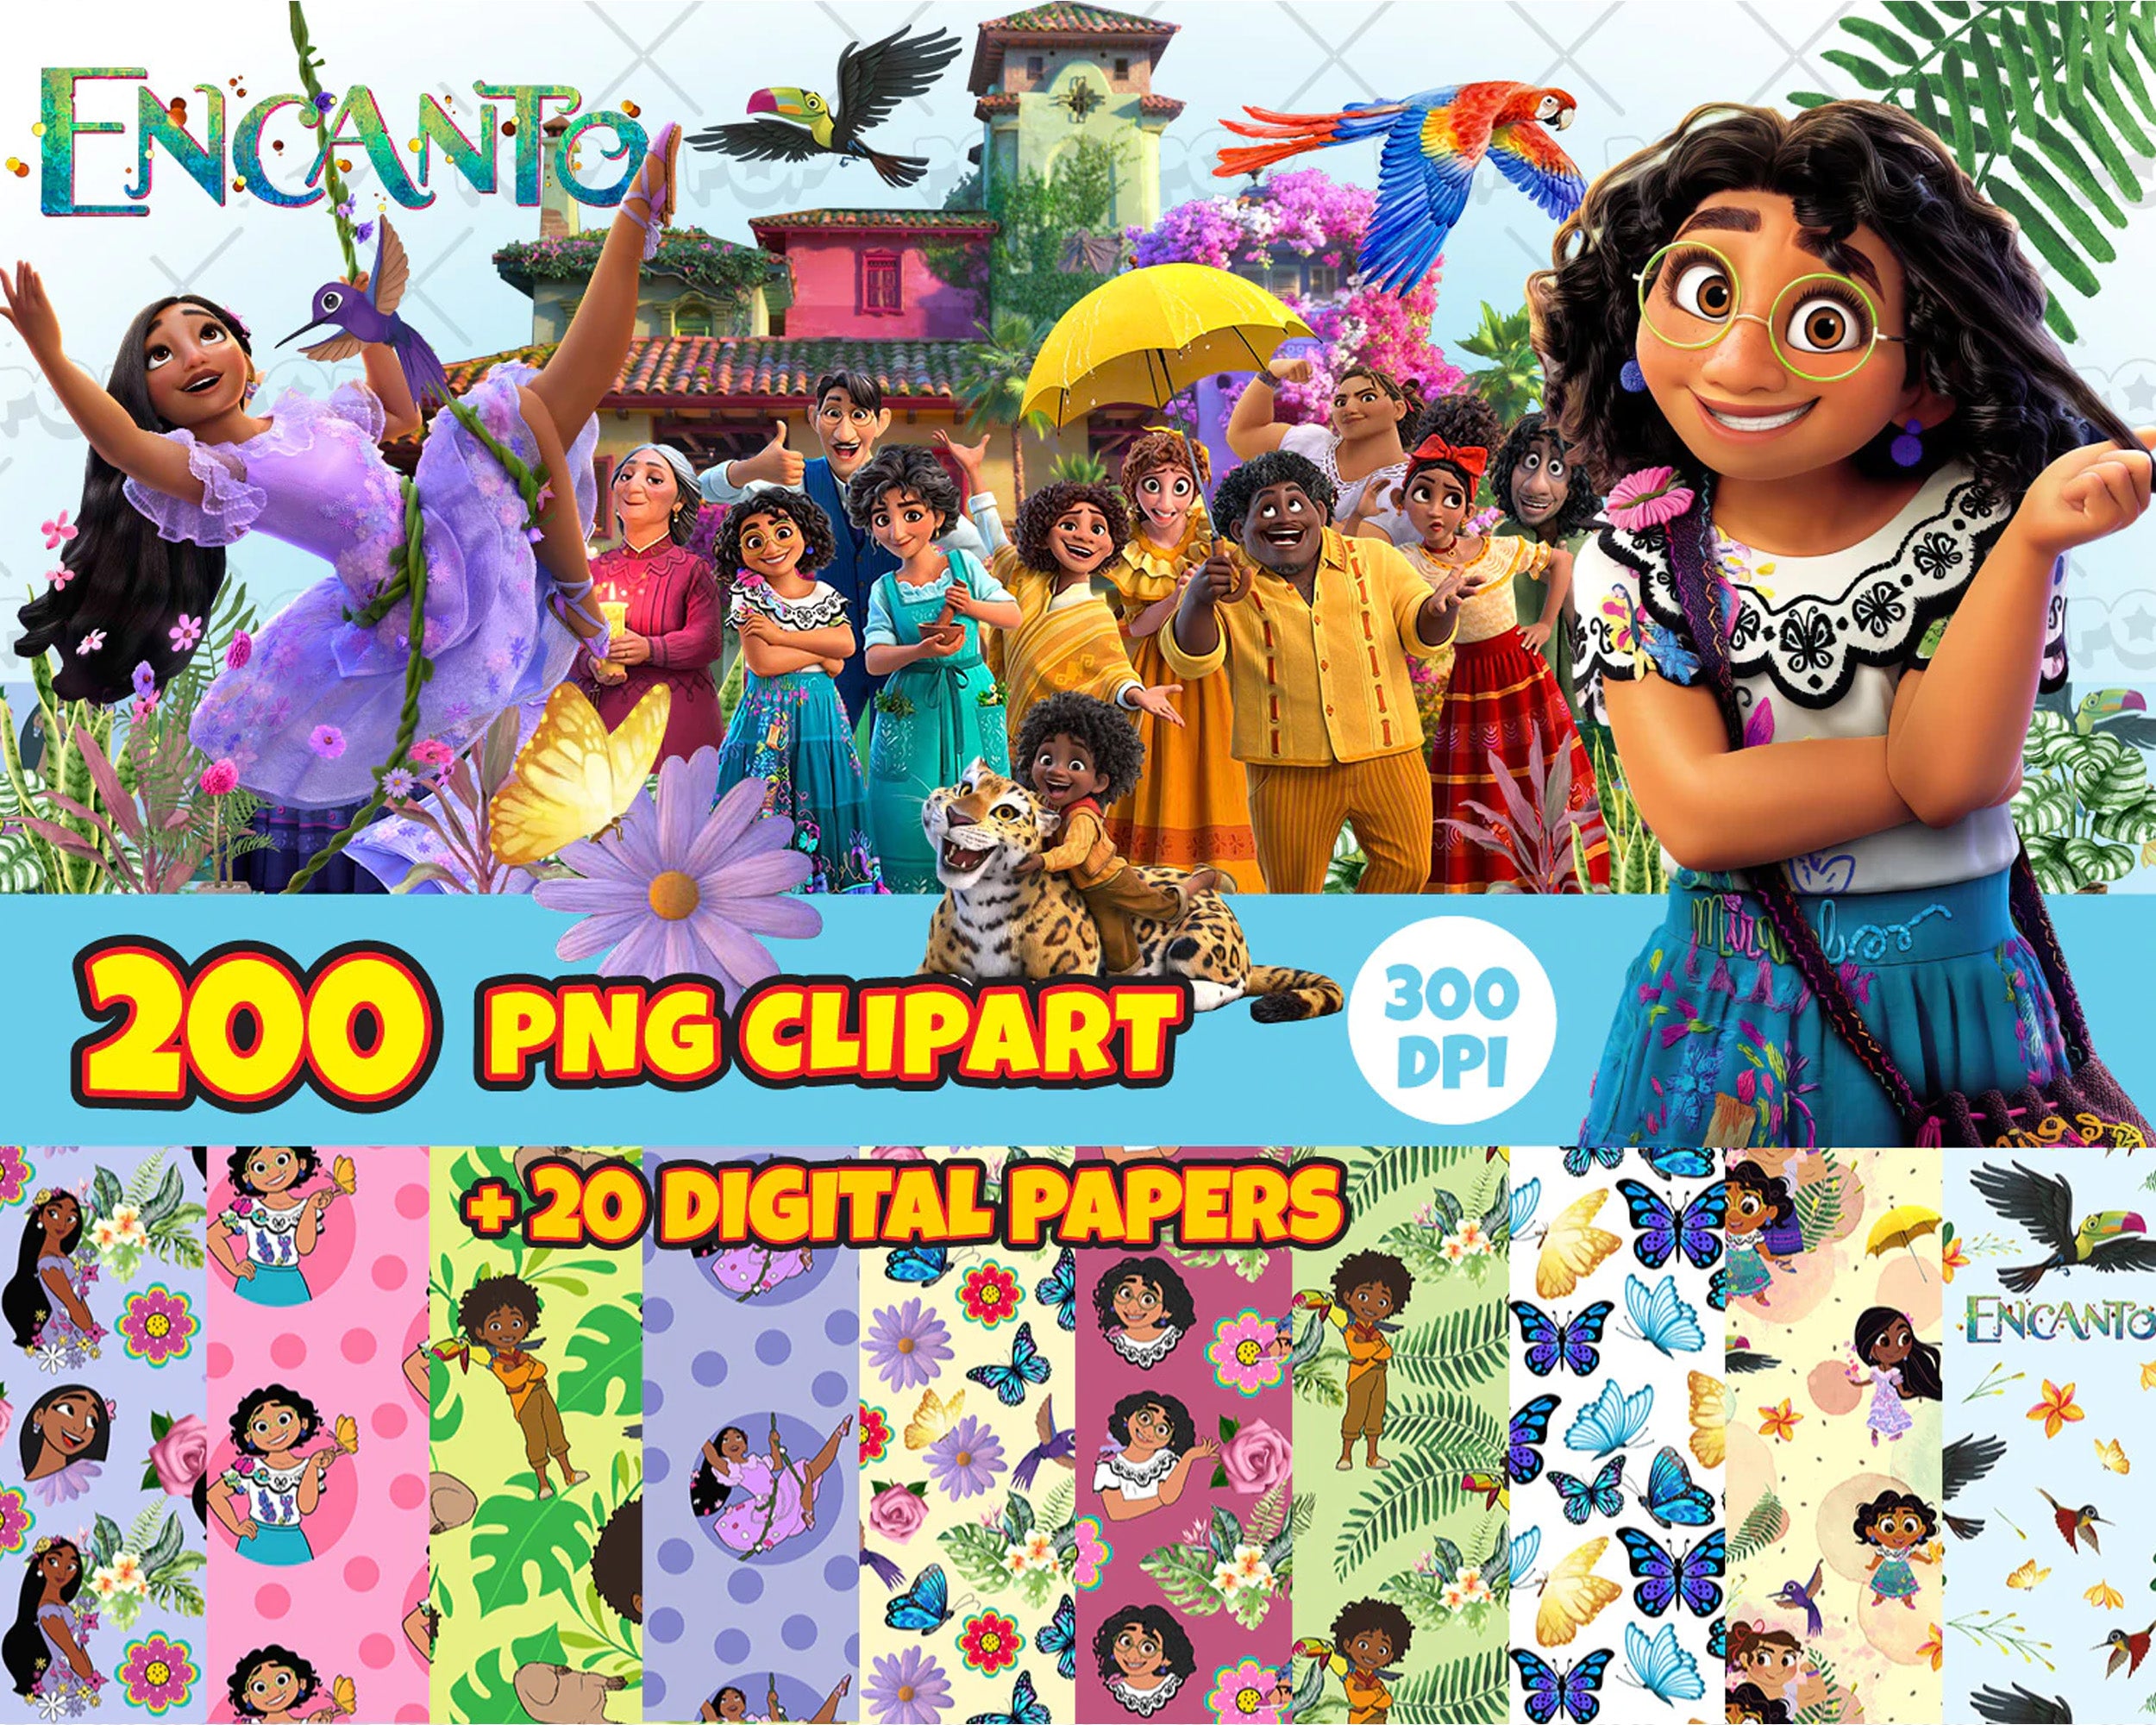 Disney Encanto clipart PNG, Printable png cut for Cricut / Silhouette, Encanto digital papers, instant download